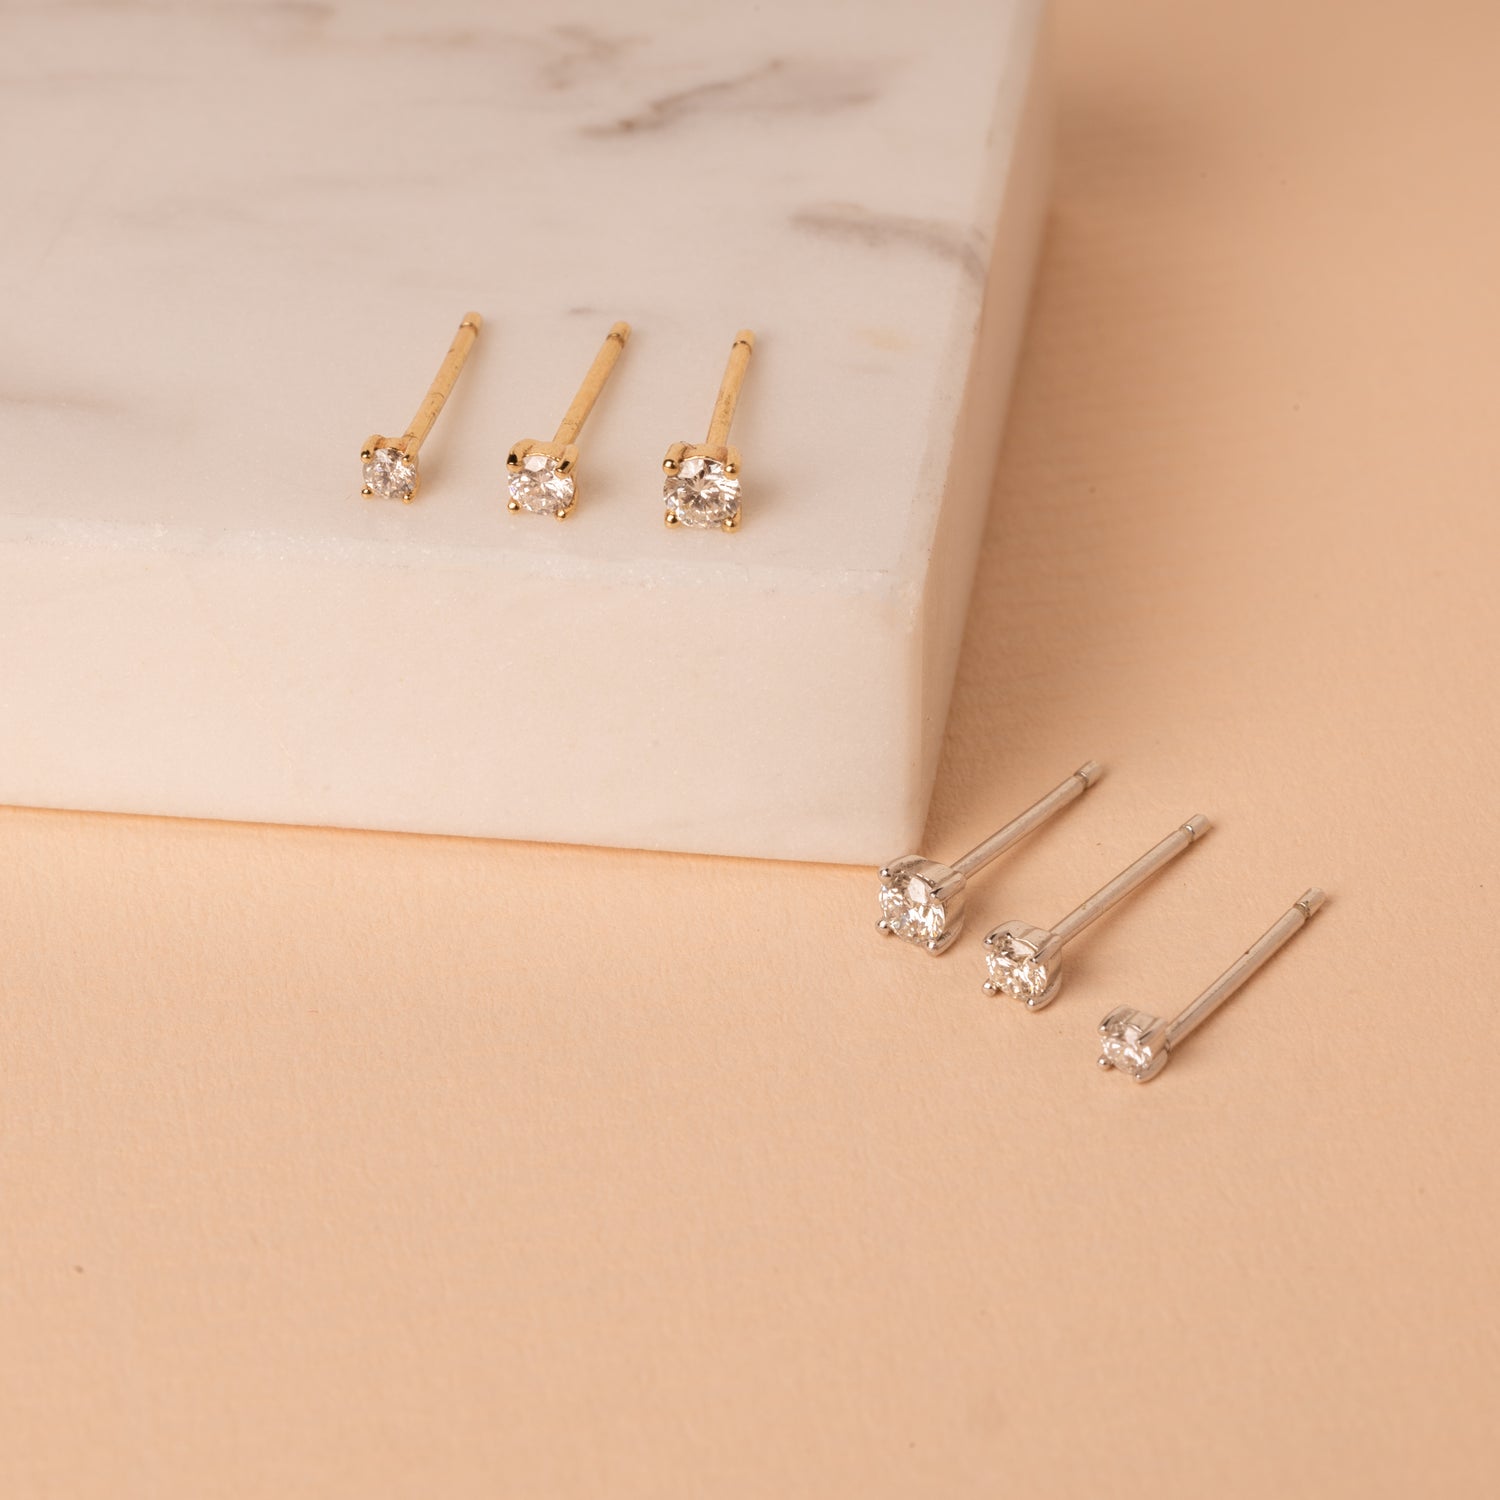 Baby Earrings | Gold bracelet for girl, Gold earrings models, Gold jewelry  sets